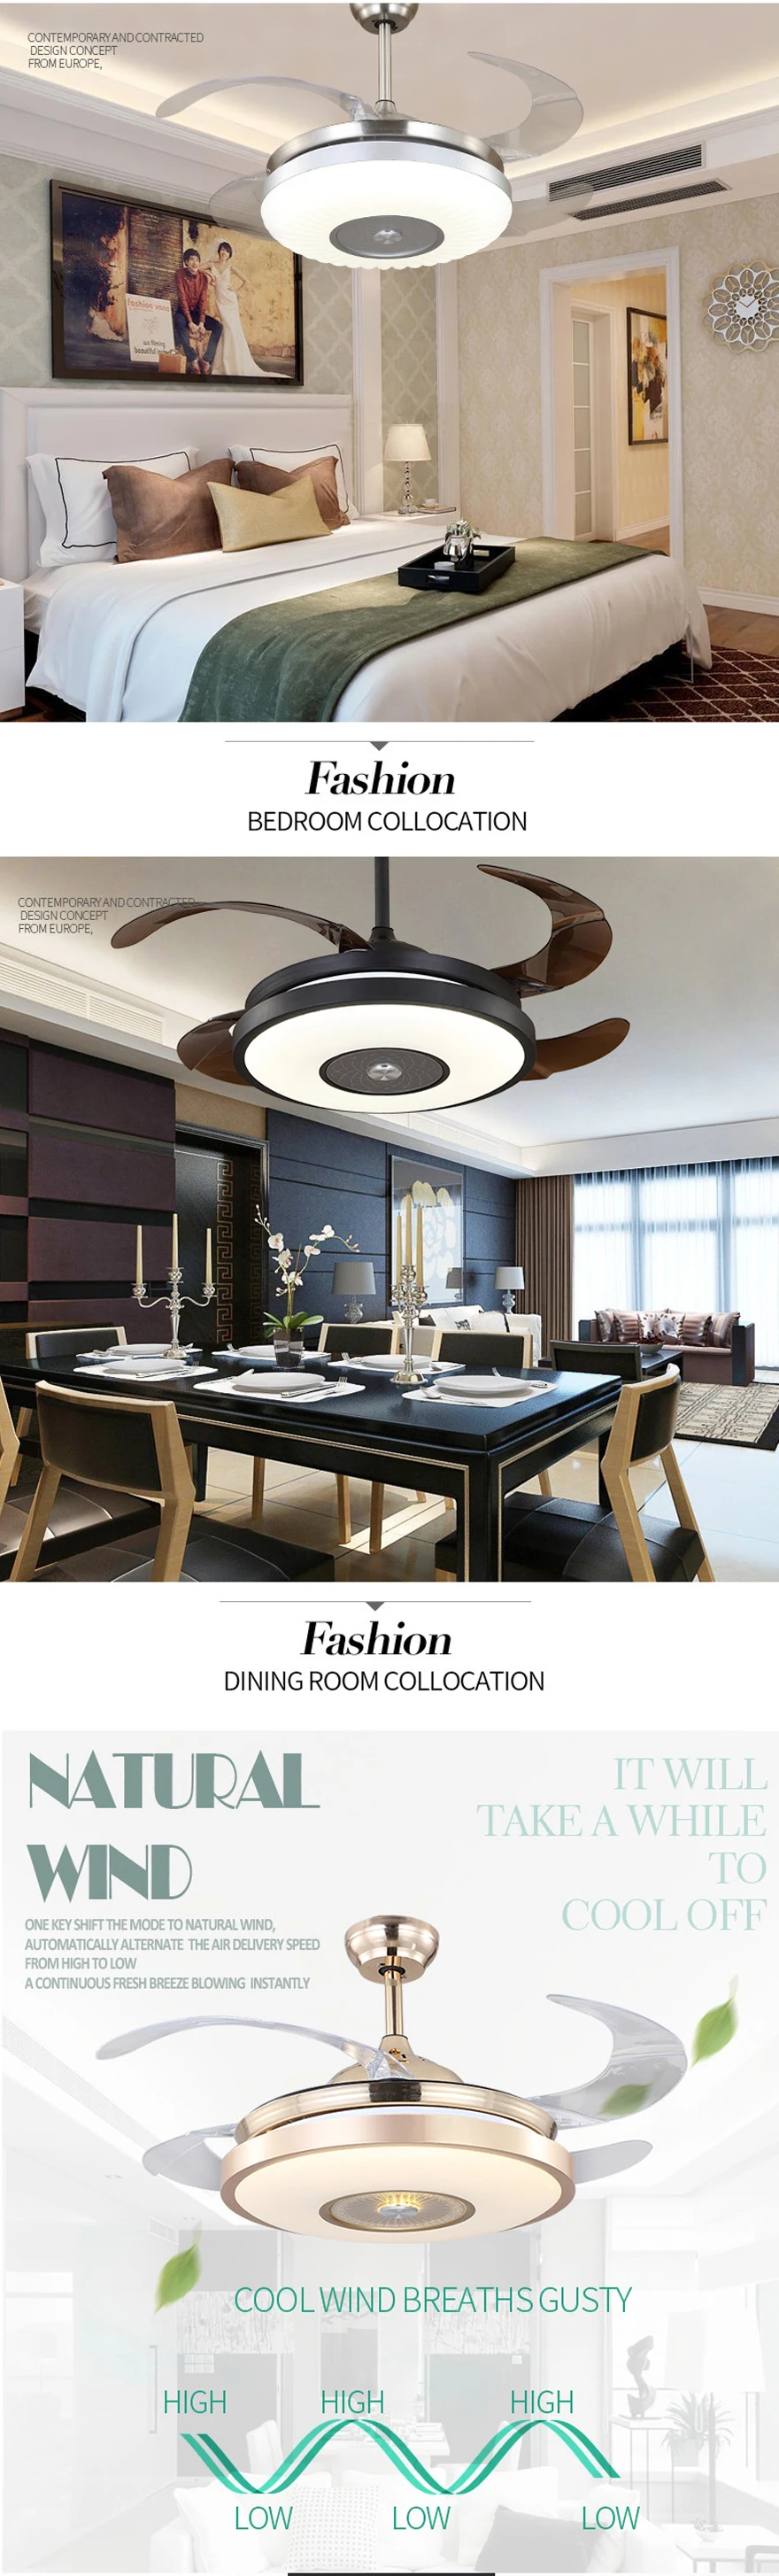 Special design modern decorative fancy ceiling fan with hidden blade